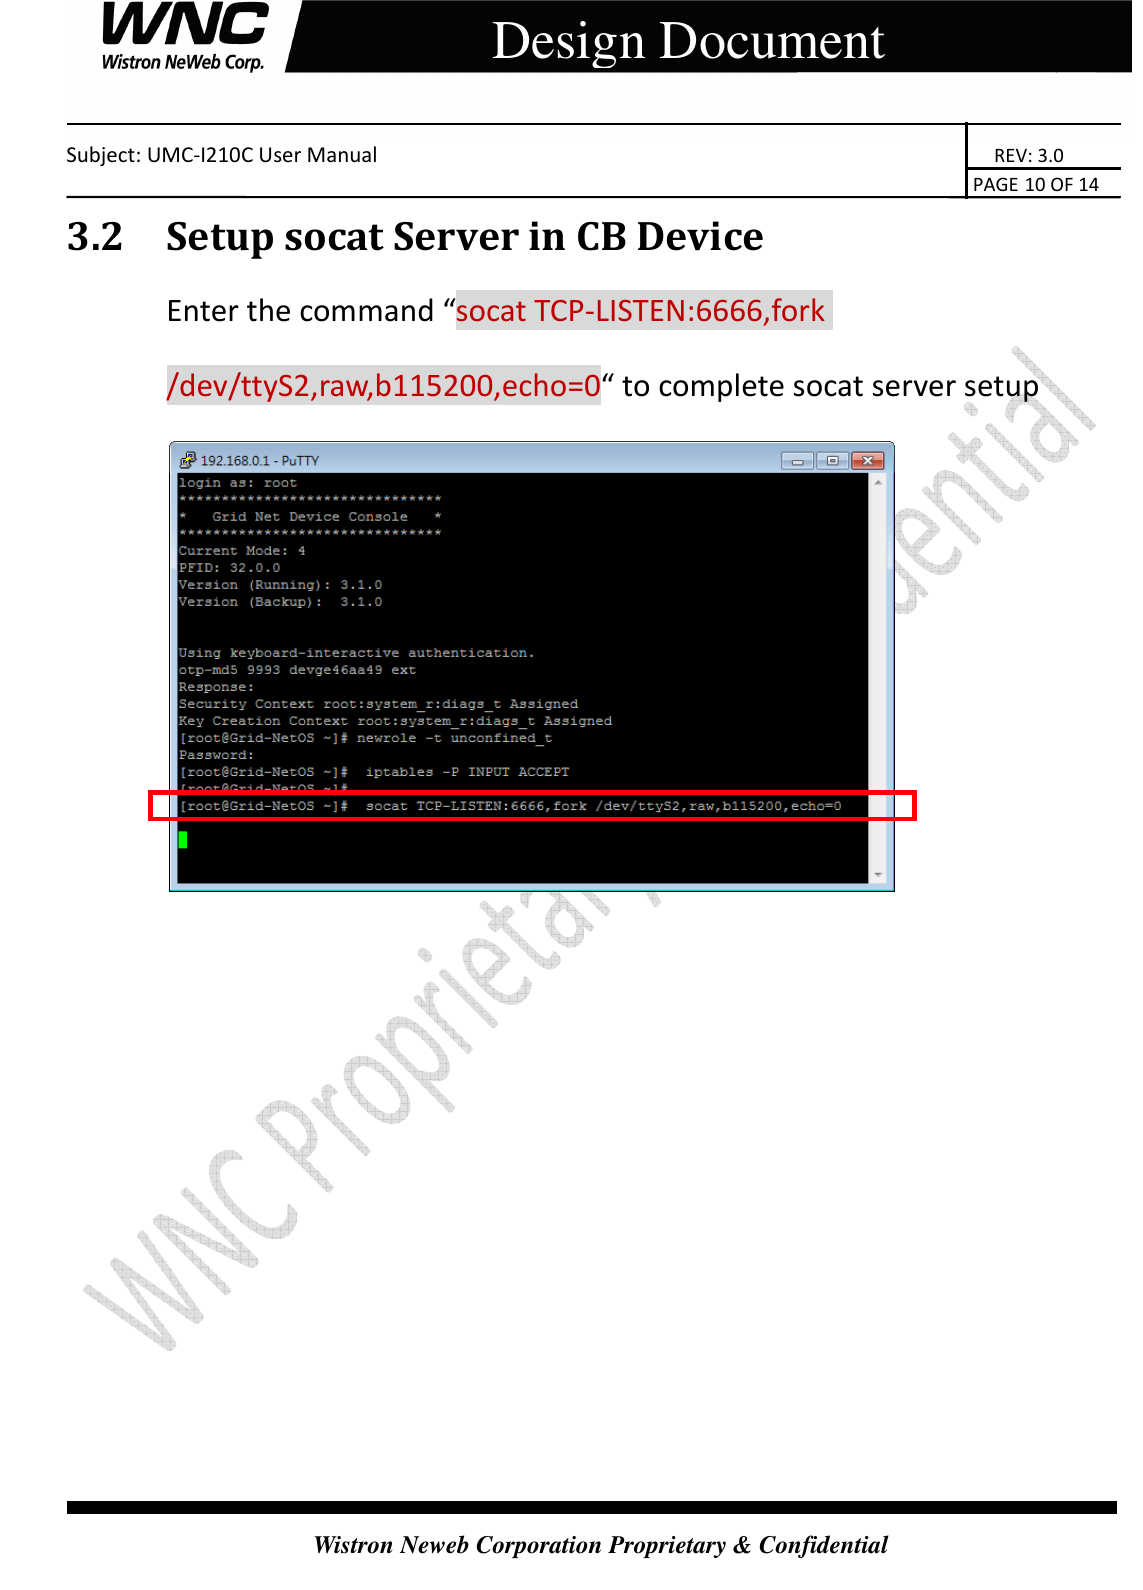    Subject: UMC-I210C User Manual                                                                       REV: 3.0                                                                                                                                                                               PAGE 10 OF 14  Wistron Neweb Corporation Proprietary &amp; Confidential     Design Document 3.2 Setup socat Server in CB Device Enter the command “socat TCP-LISTEN:6666,fork /dev/ttyS2,raw,b115200,echo=0“ to complete socat server setup                 